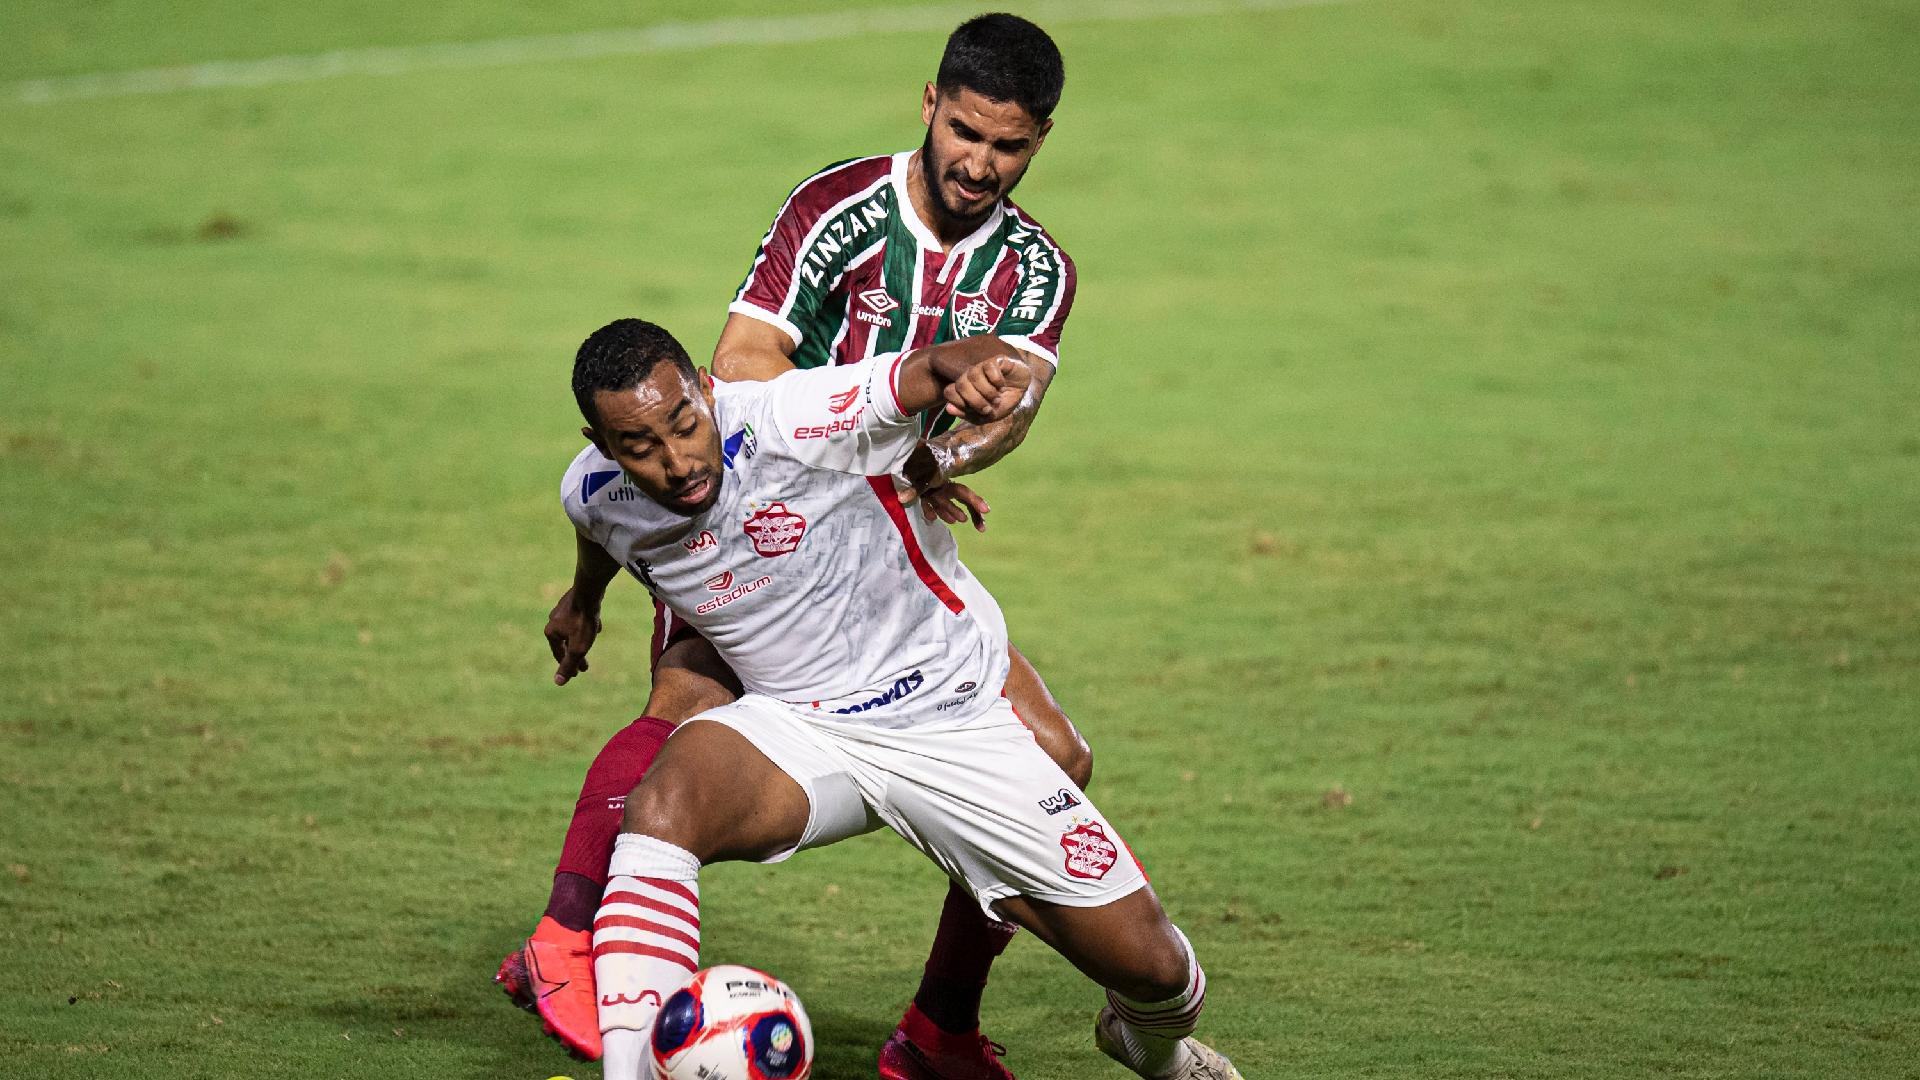 Dionathan e Igor Juliao disputam a bola durante a partida entre Bangu x Fluminense, pelo Campeonato Carioca